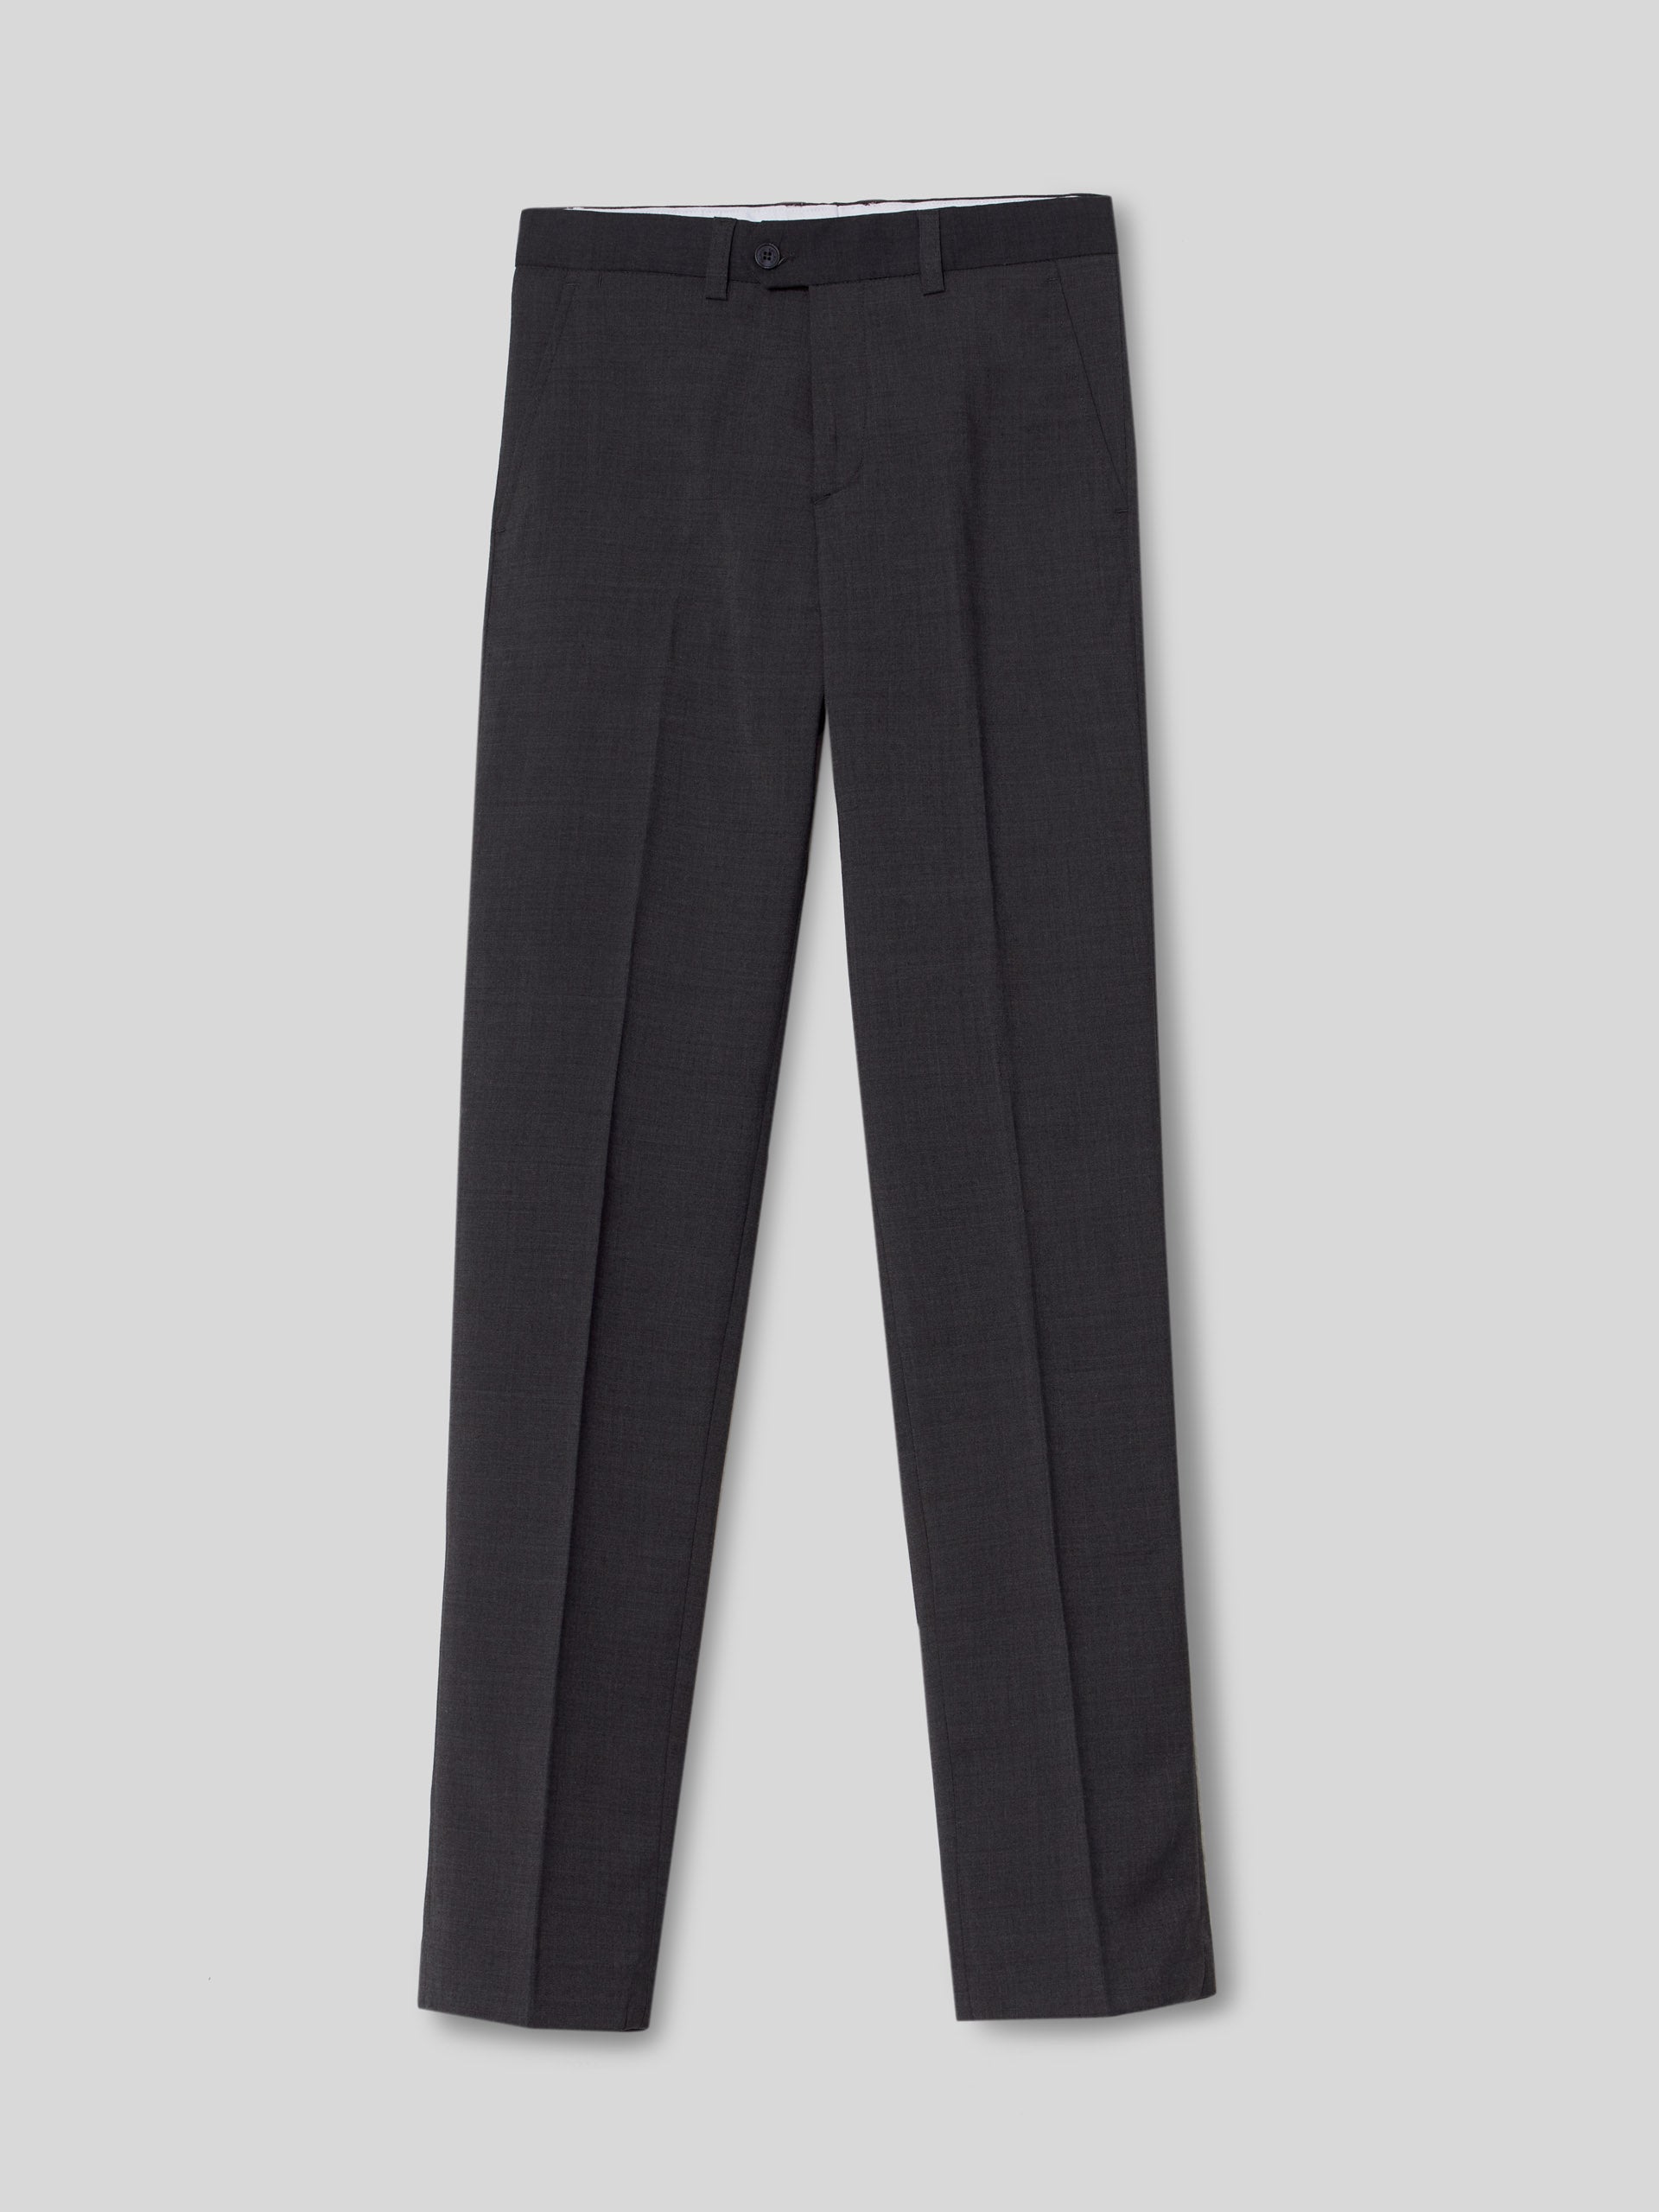 Pantalon vestir classic gris marengo